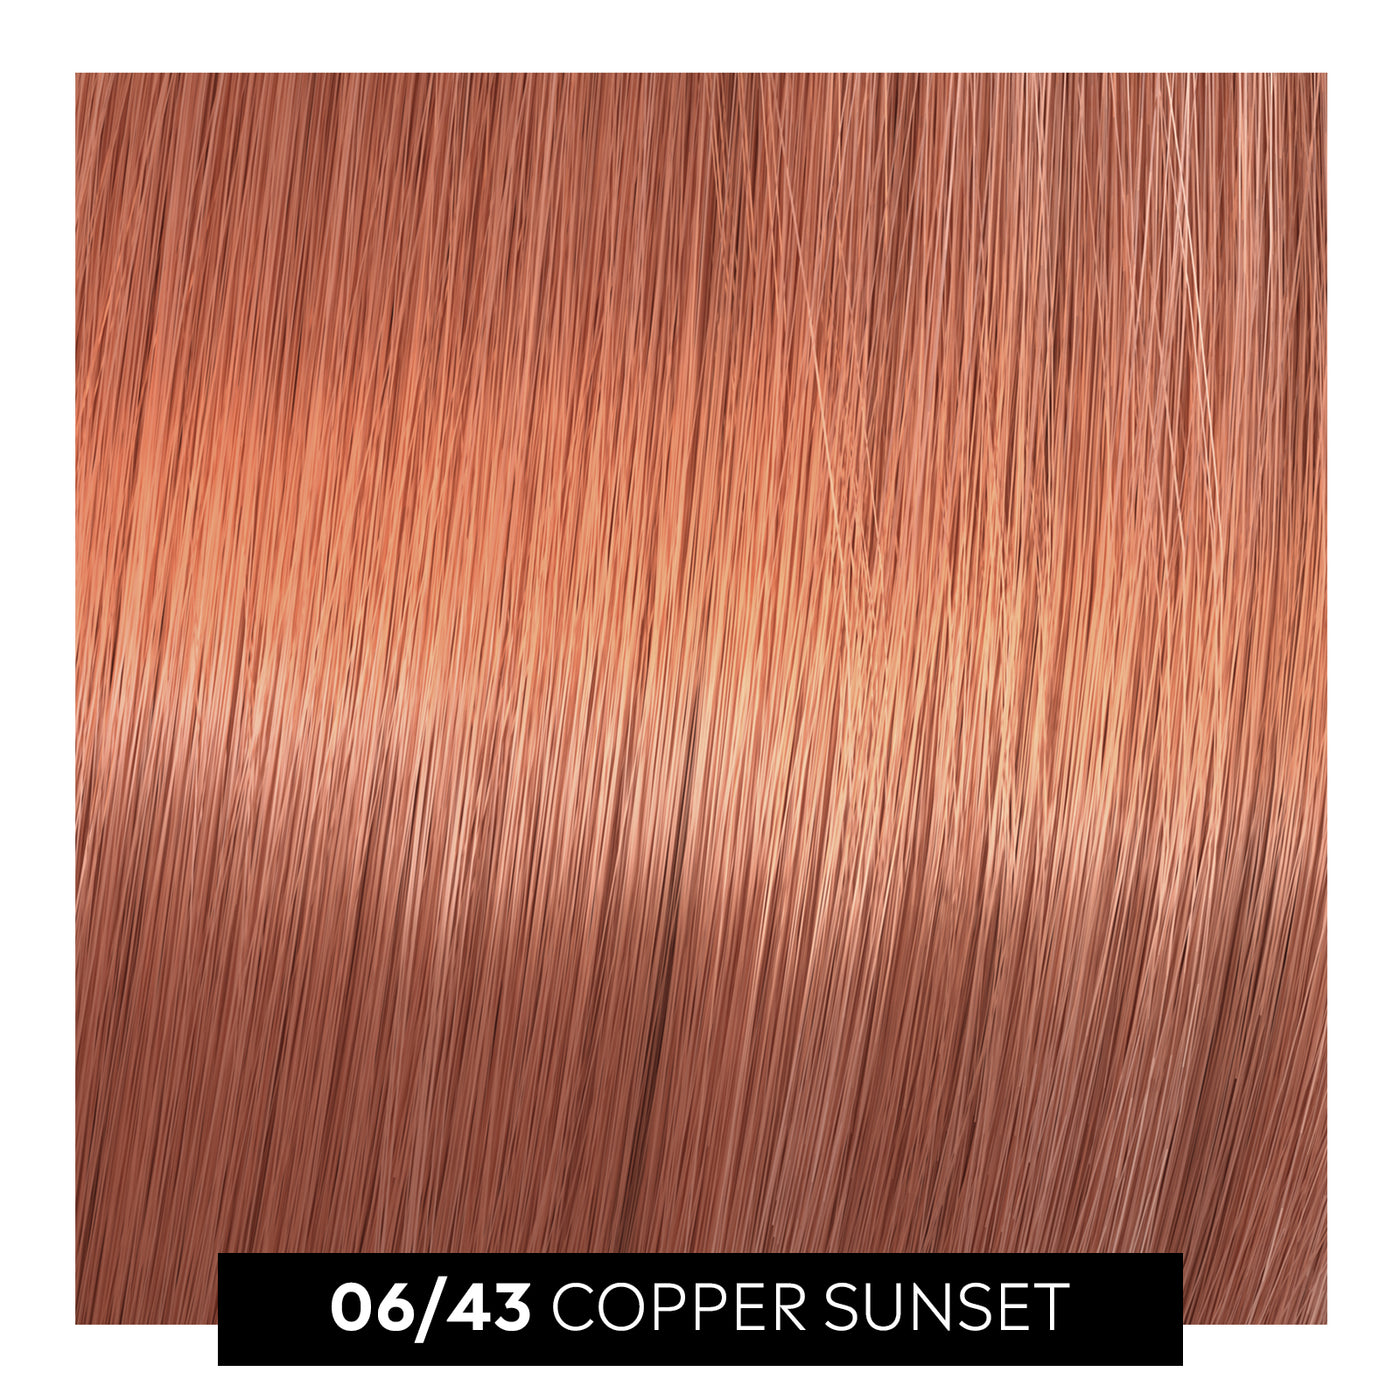 06/43 copper sunset